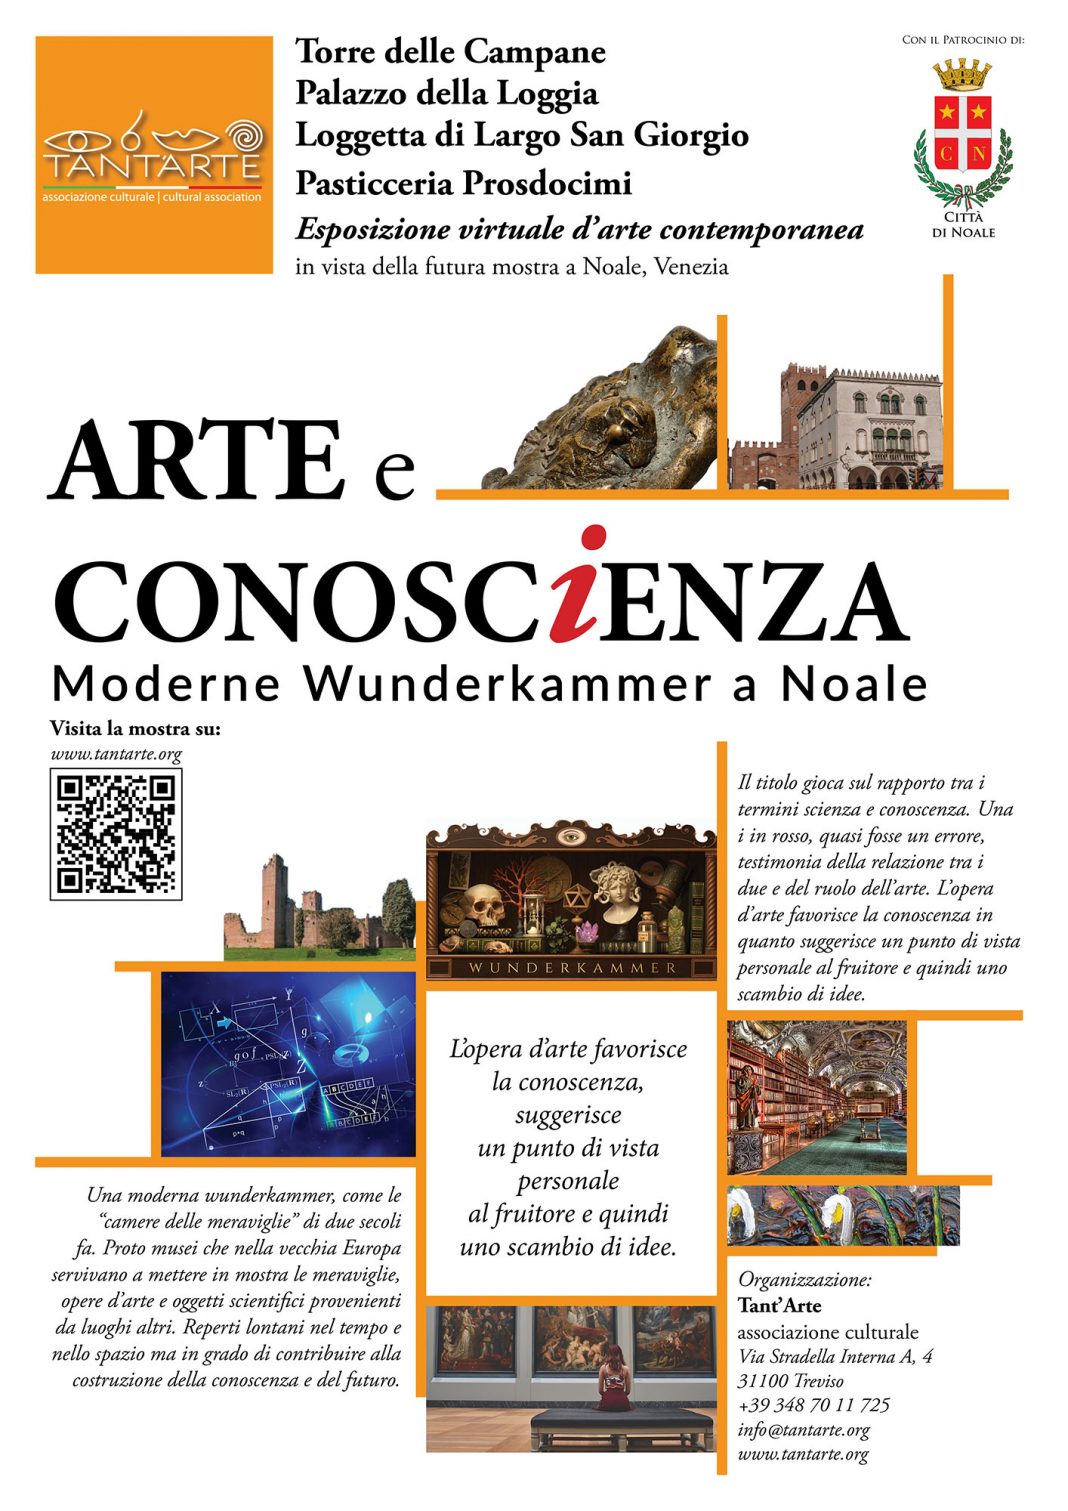 Arte e conosc(i)enza. Moderne Wunderkammern a Noalehttps://www.exibart.com/repository/media/formidable/11/Presentazione-Mostra-online-1068x1511.jpg